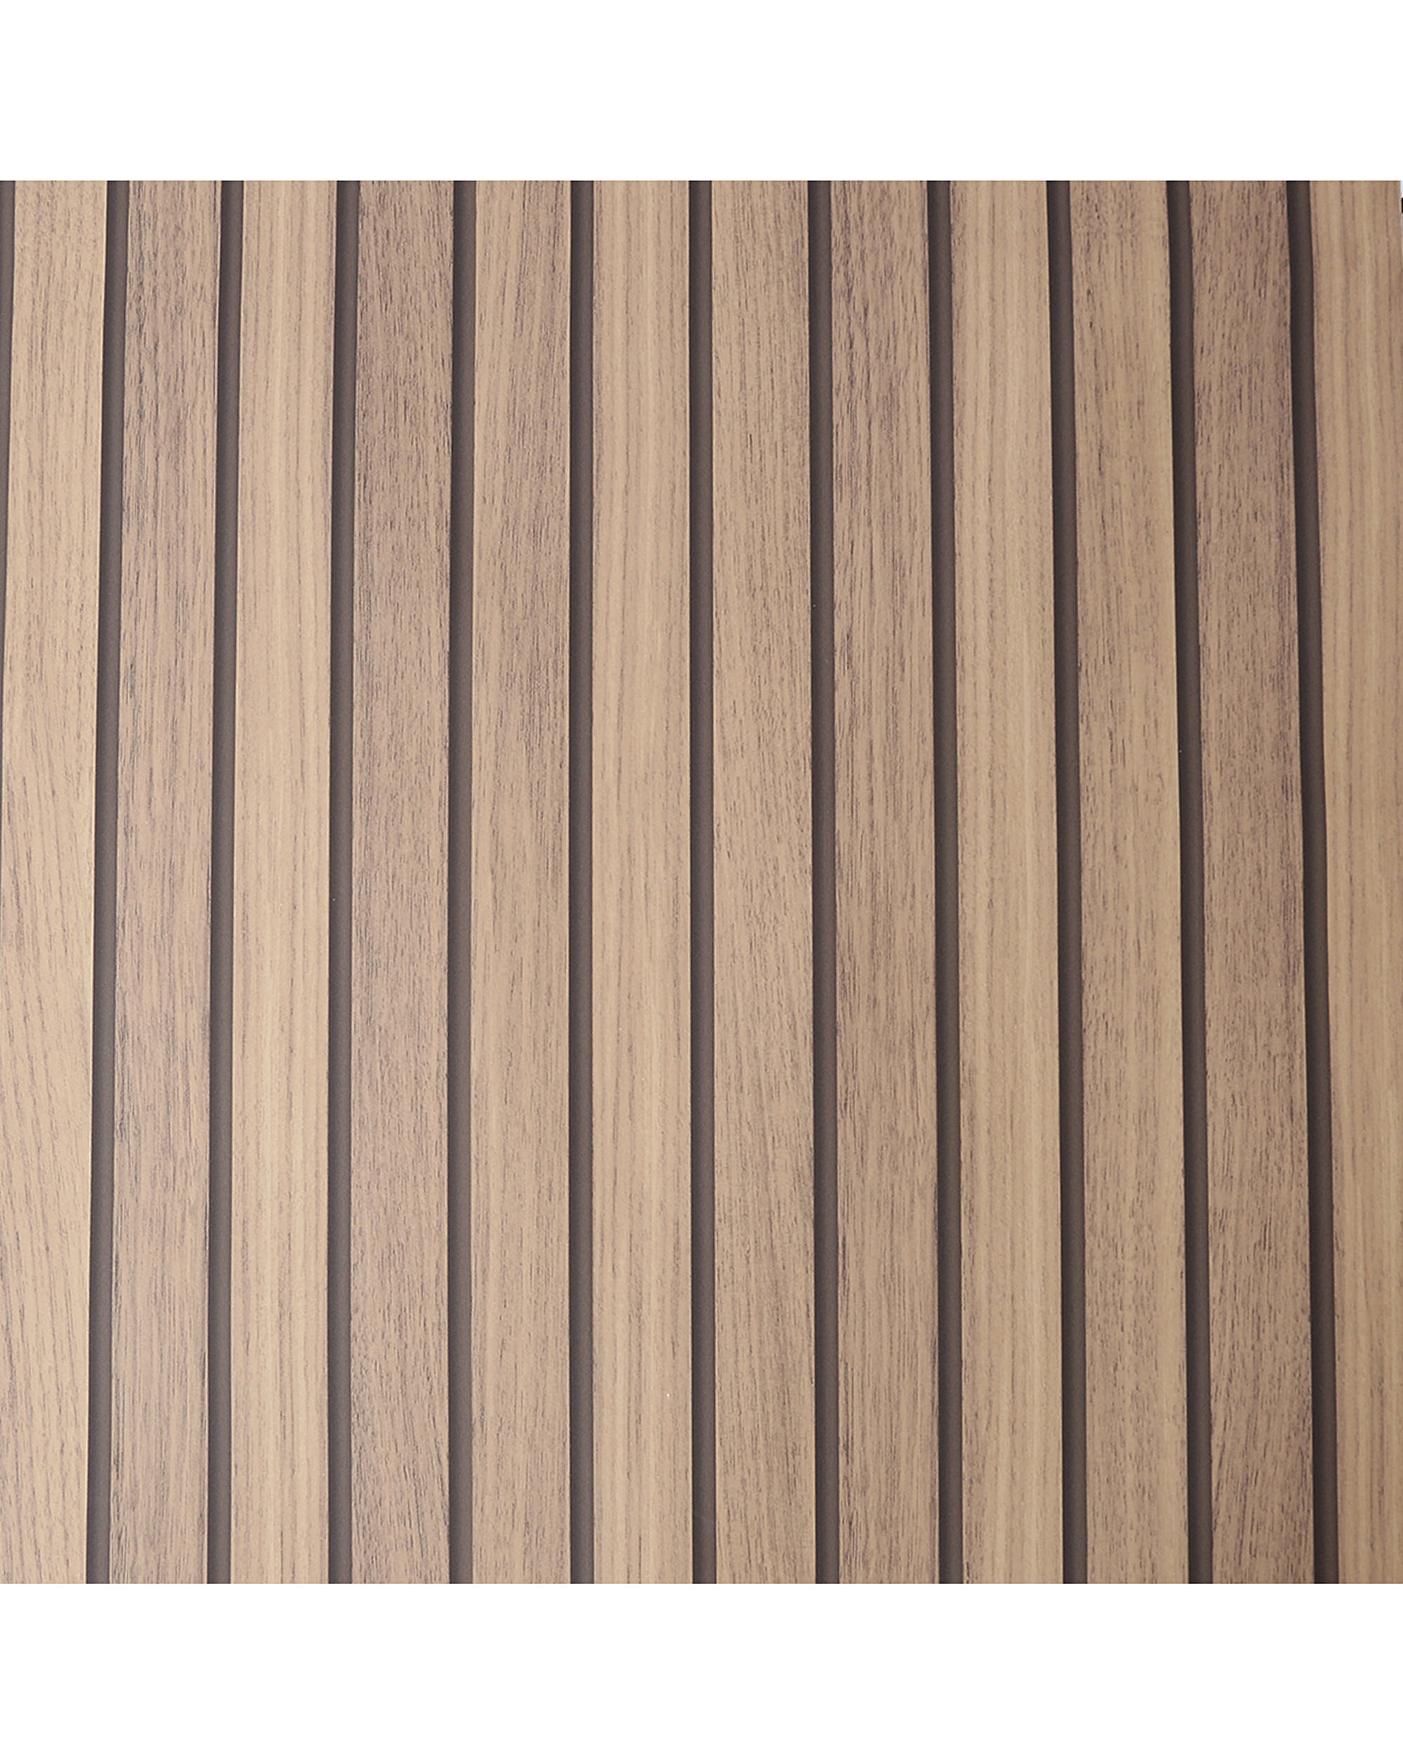 Wooden Slat Grey Wallpaper 119613  119613